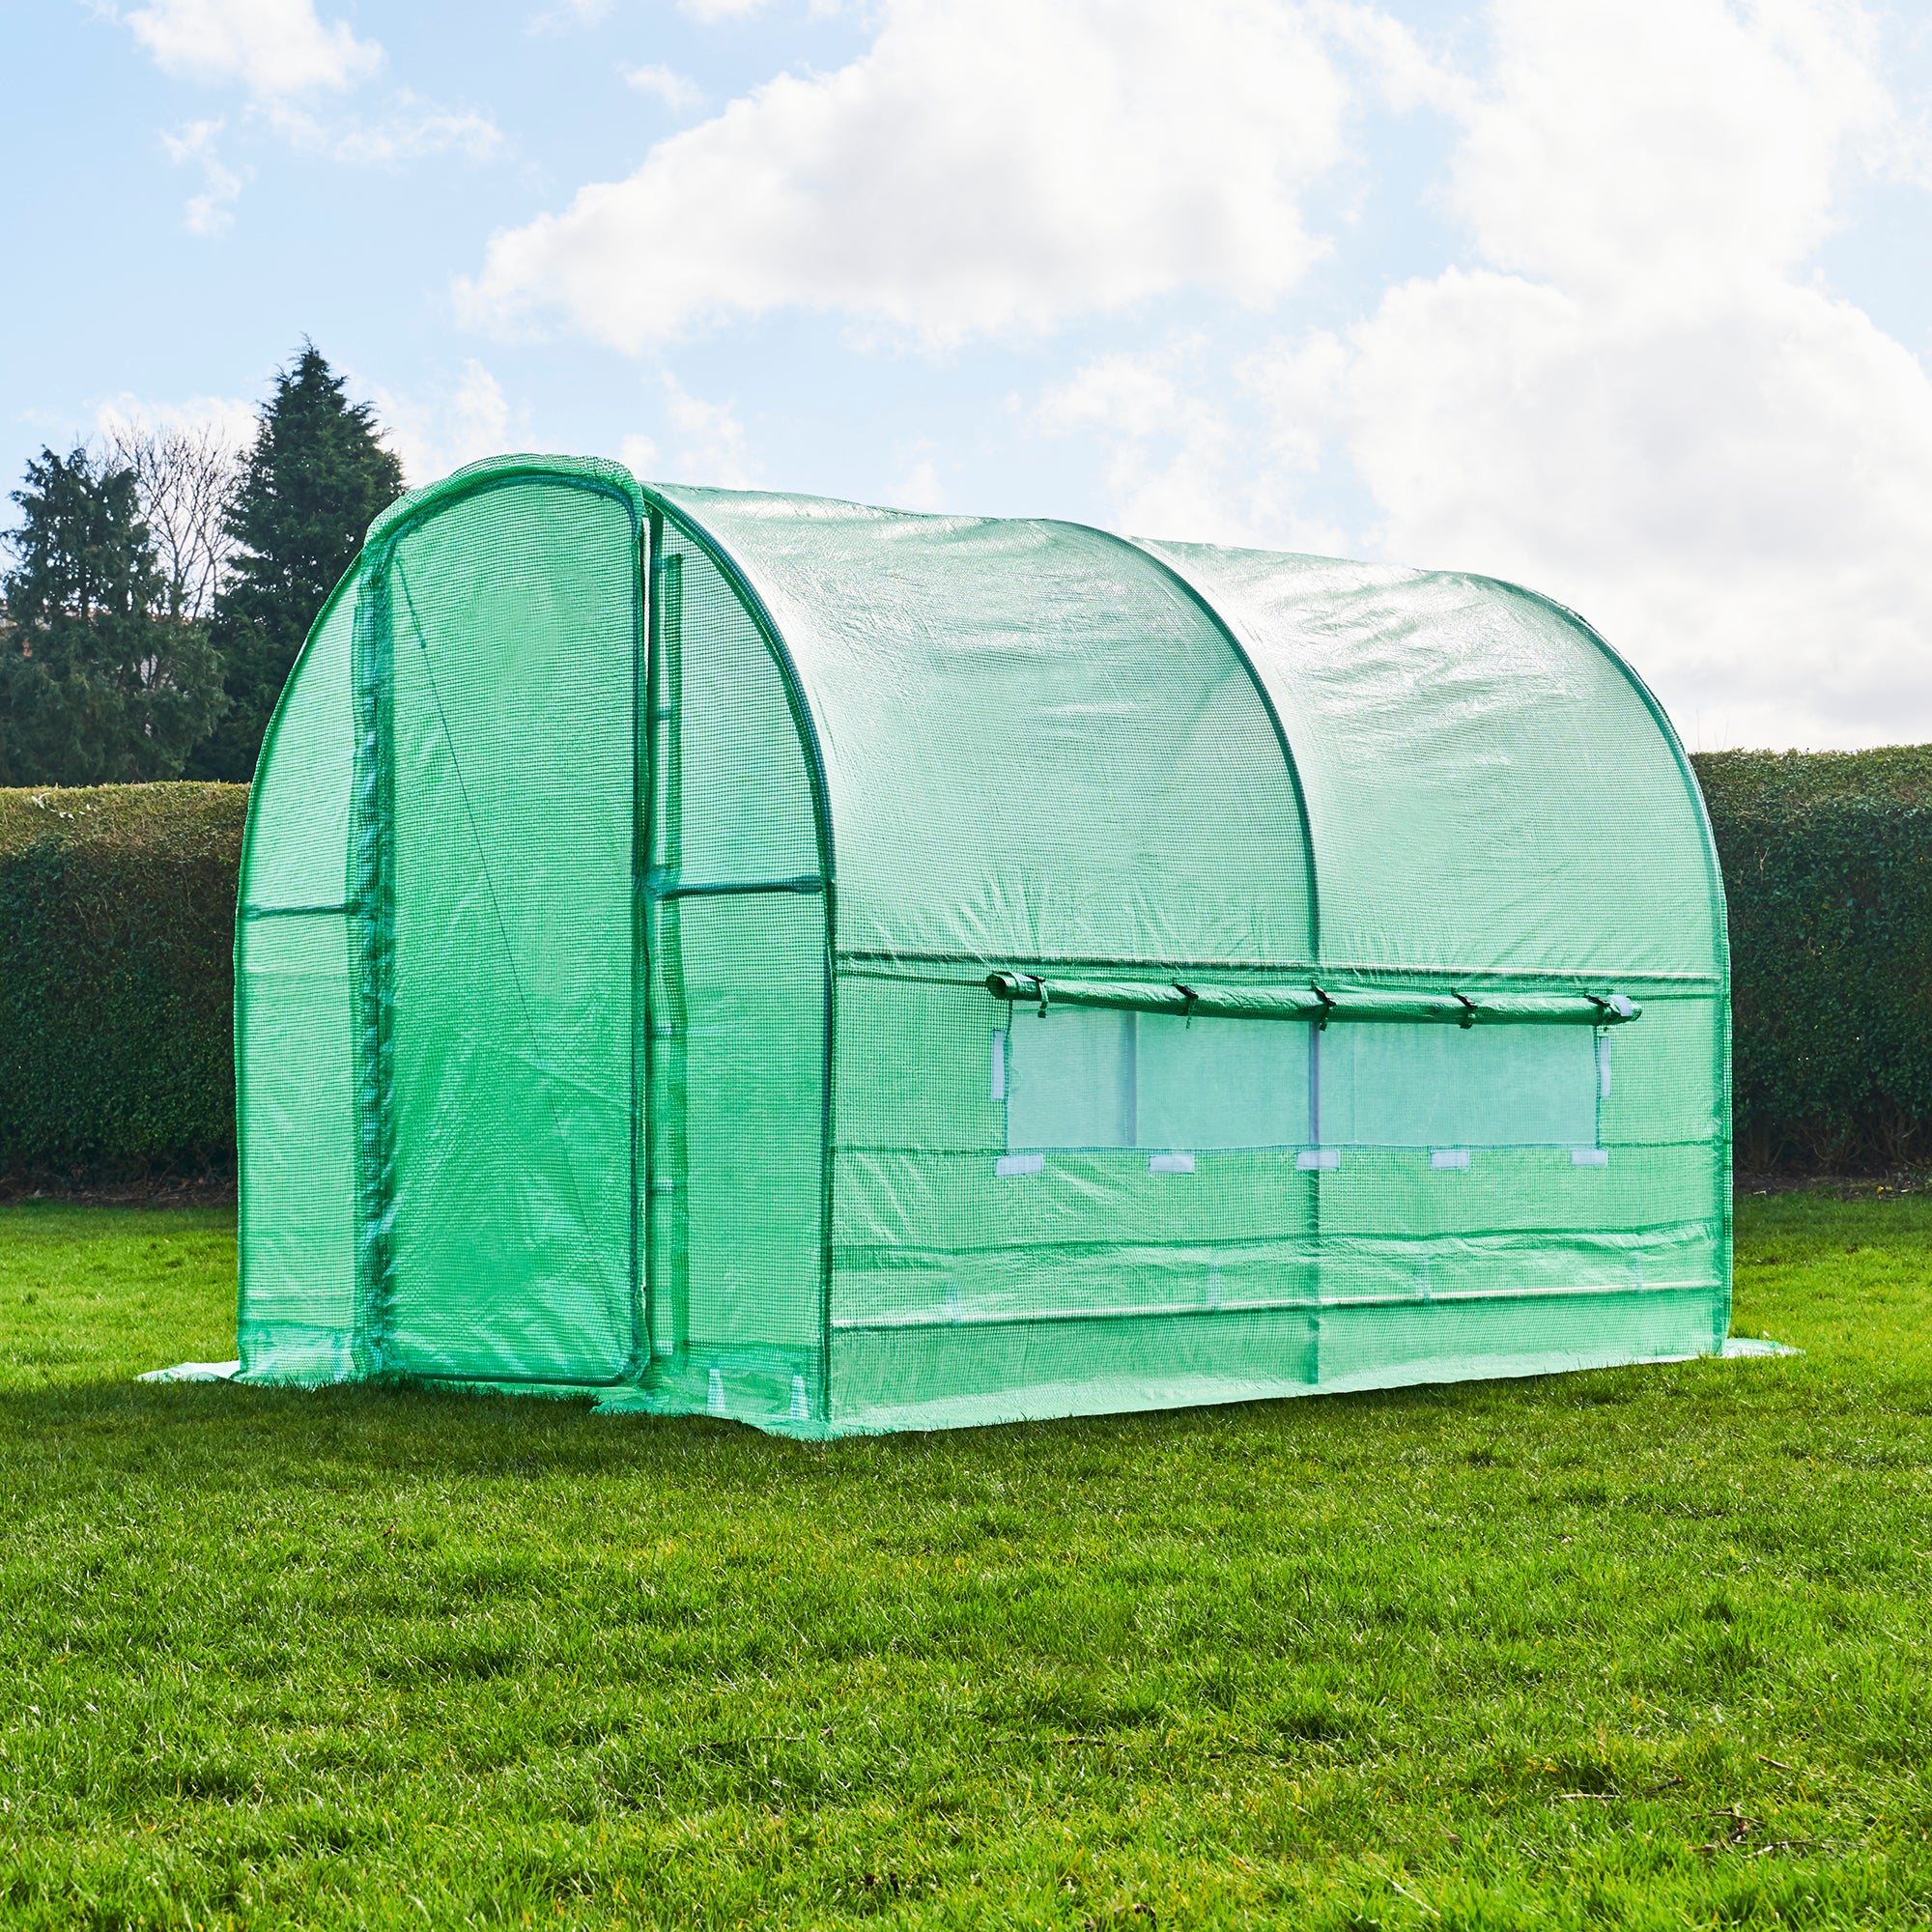 Building a polytunnel garden greenhouse